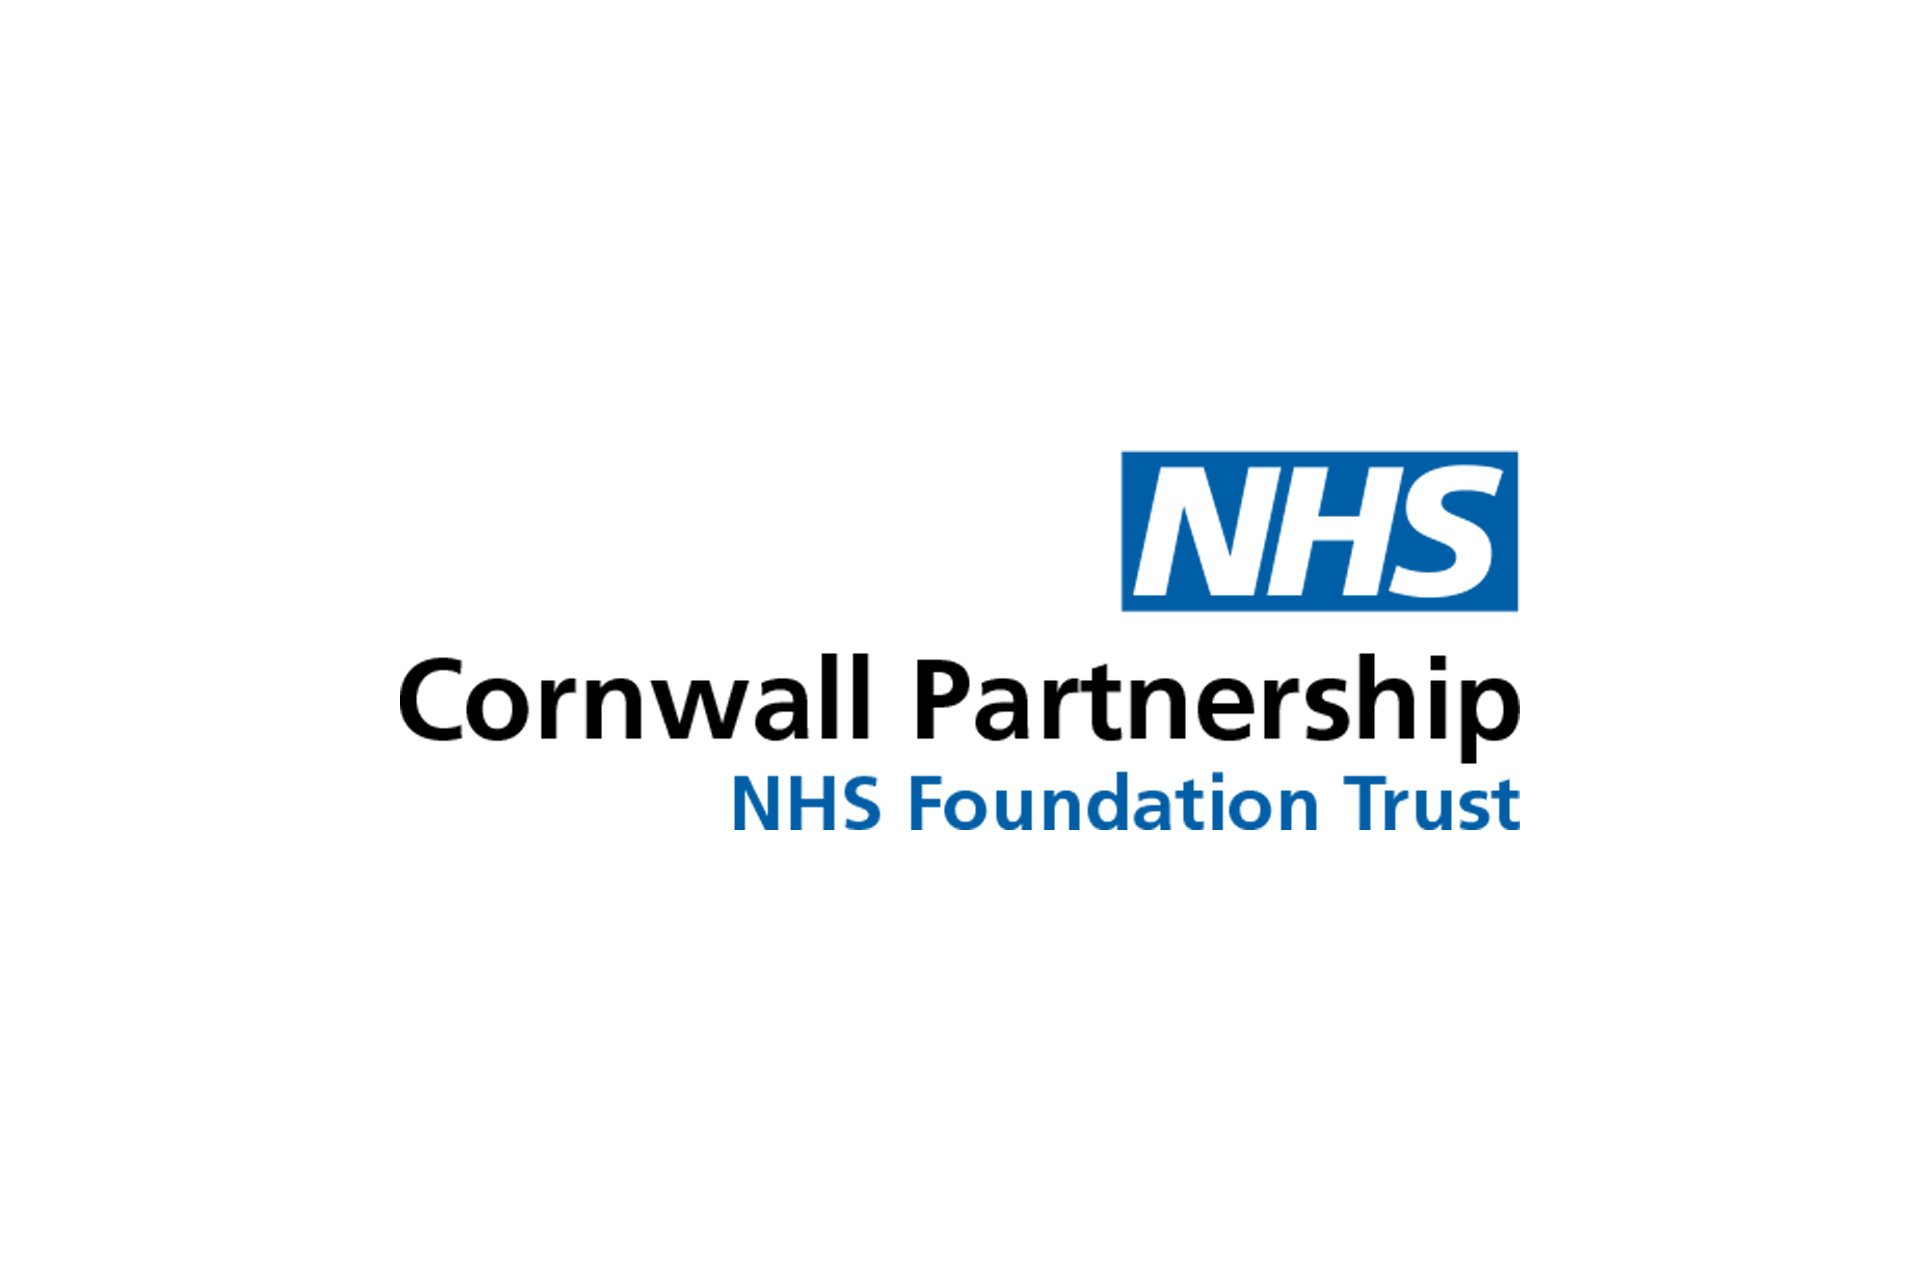 CORNWALL PARTNERSHIP NHS FOUNDATION TRUST